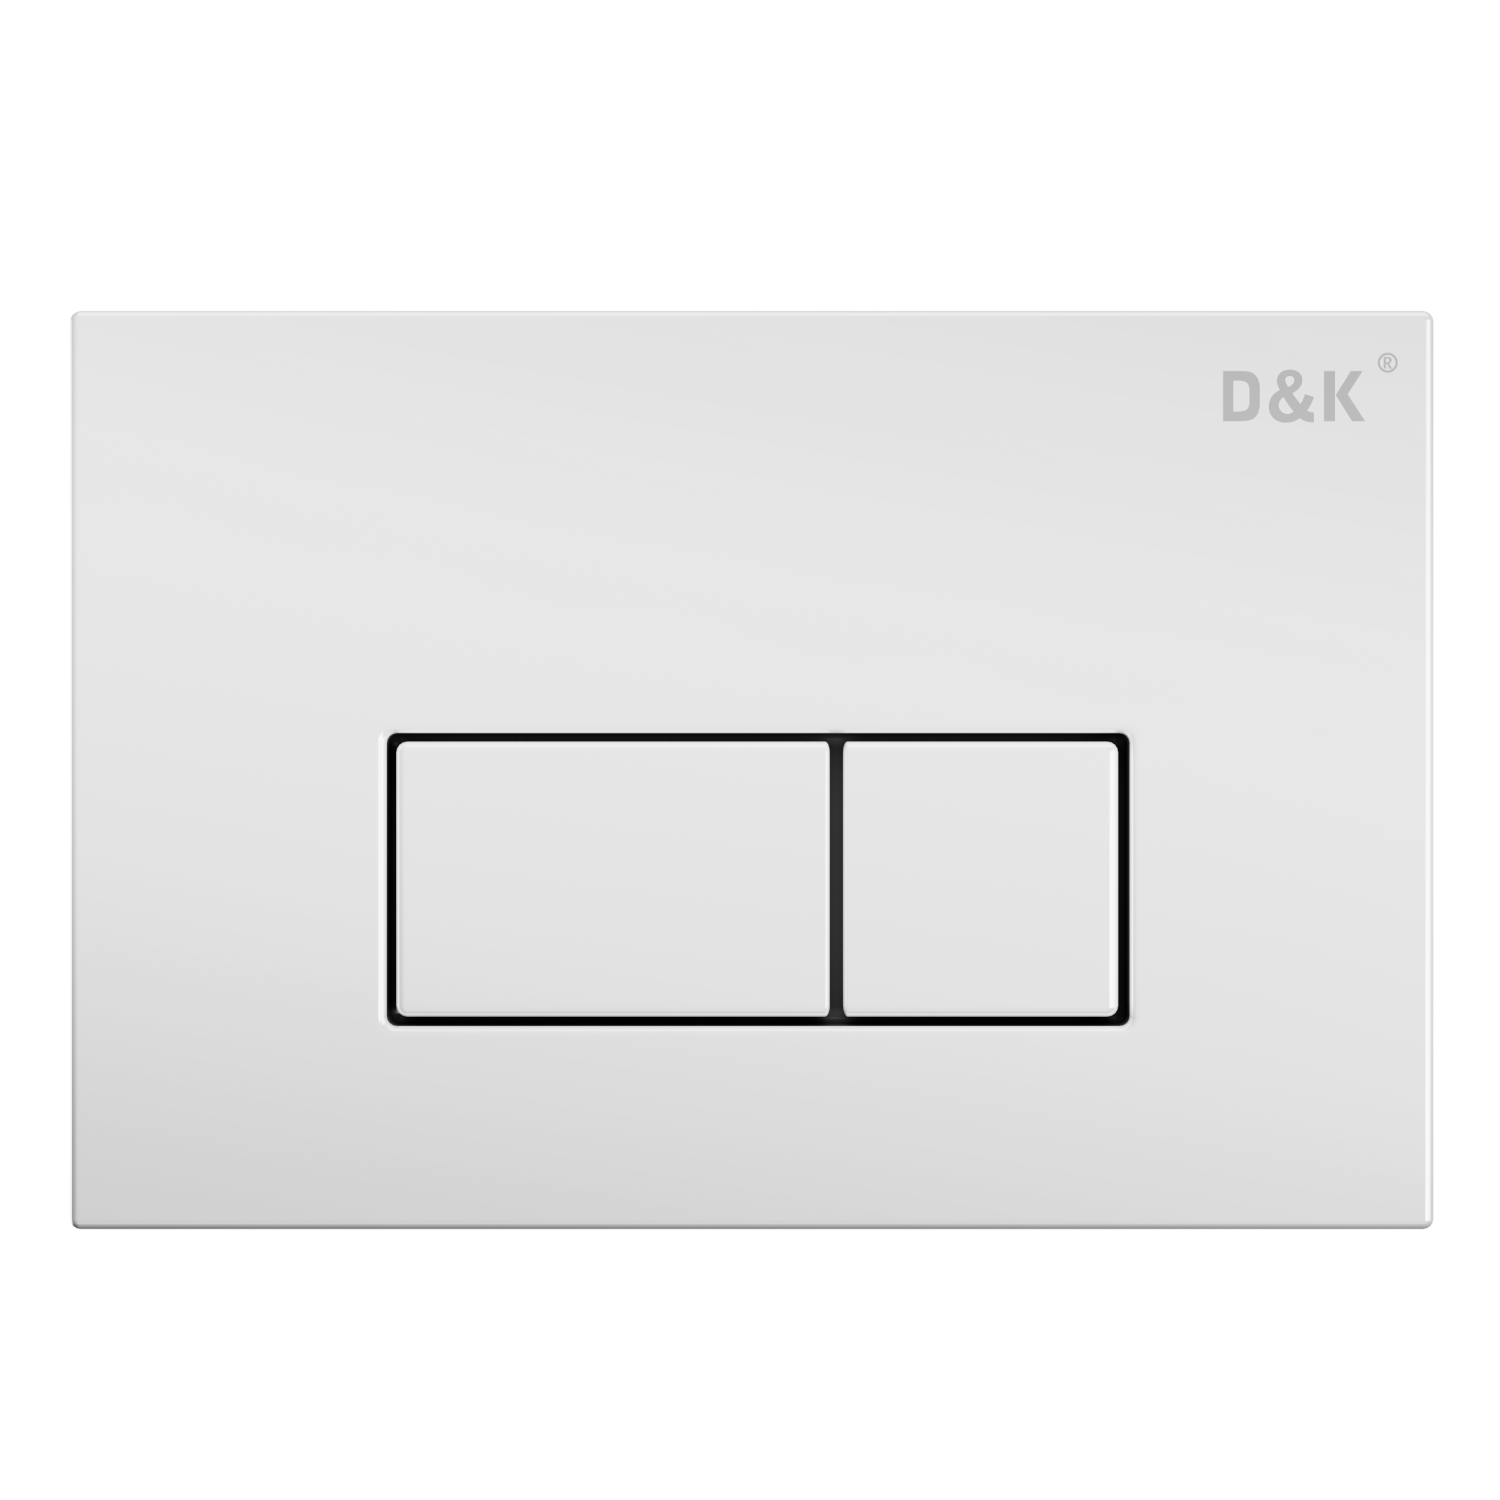 DS1431617 Комплект D&K Berlin  Унитаз DT1436016 бел. +Клавиша смыва DB1499016, бел. +Инсталляция DI8050127